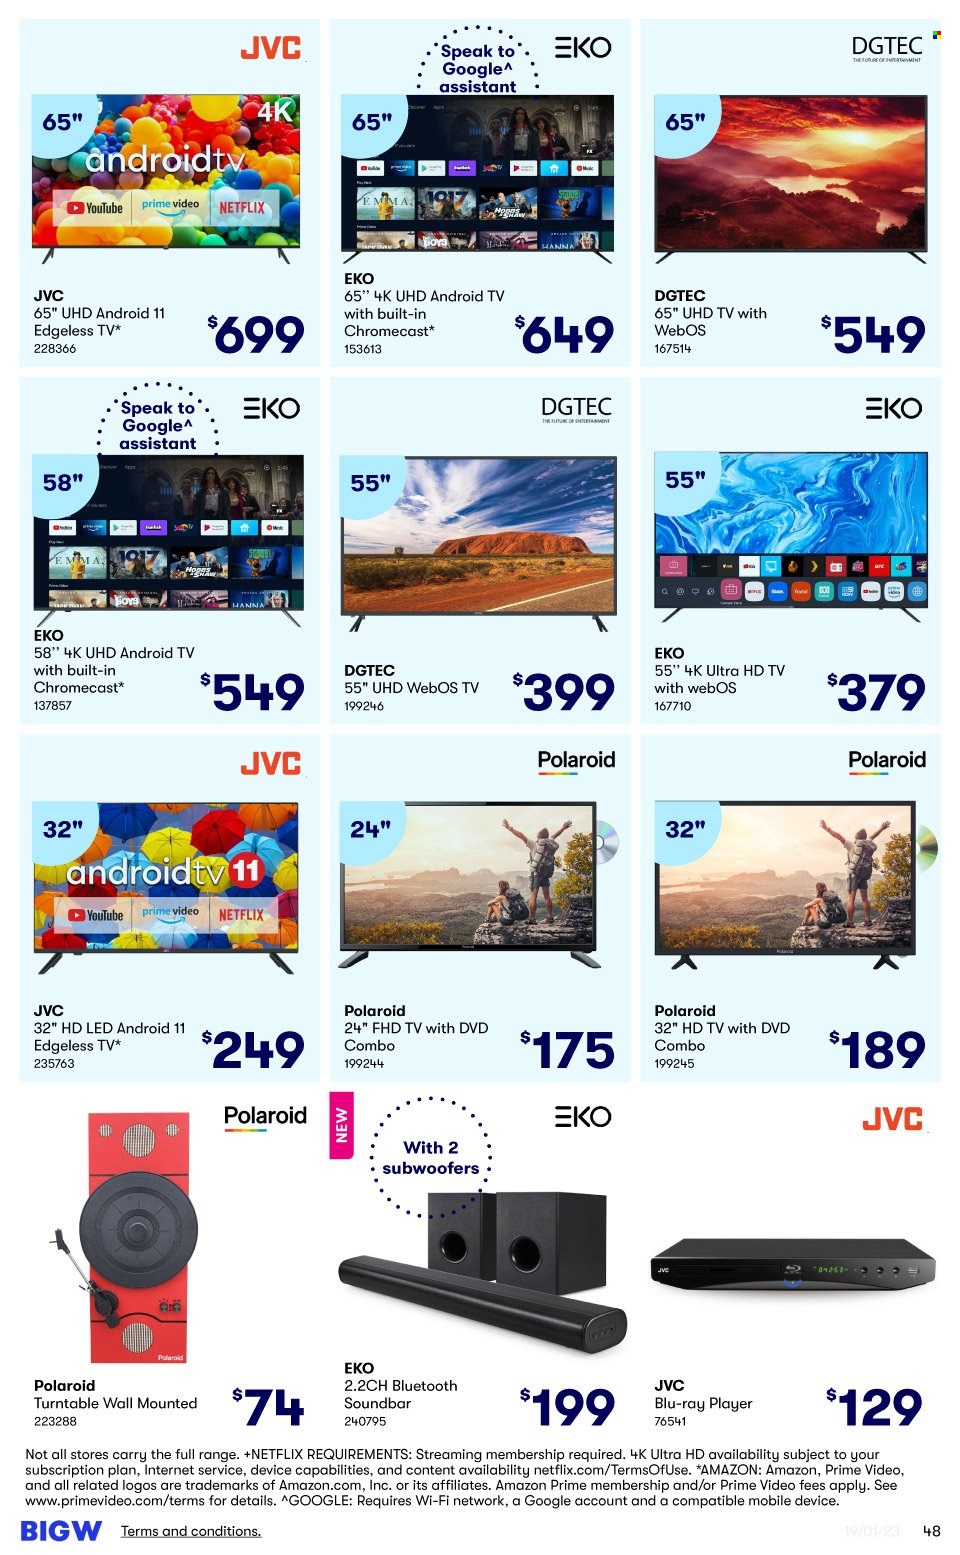 thumbnail - BIG W Catalogue - Sales products - DVD, Polaroid, JVC, Android TV, UHD TV, ultra hd, HDTV, TV, Blu-ray, sound bar, Google Chromecast. Page 48.